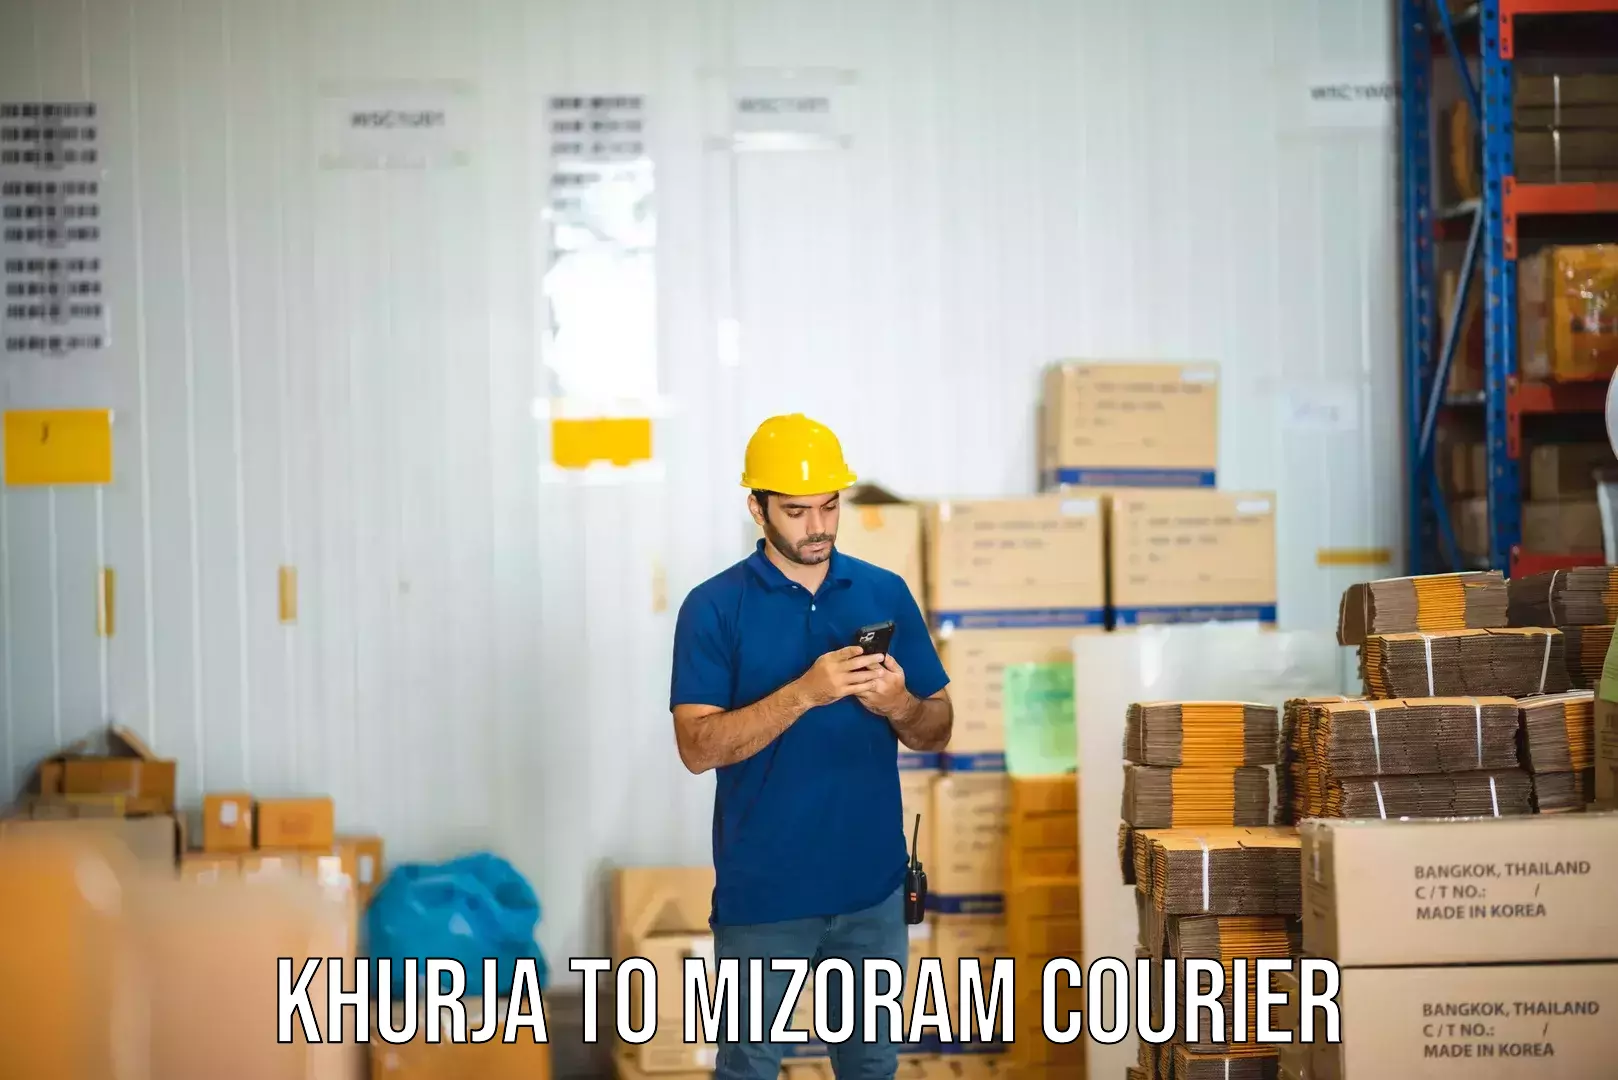 Courier service innovation Khurja to Mizoram